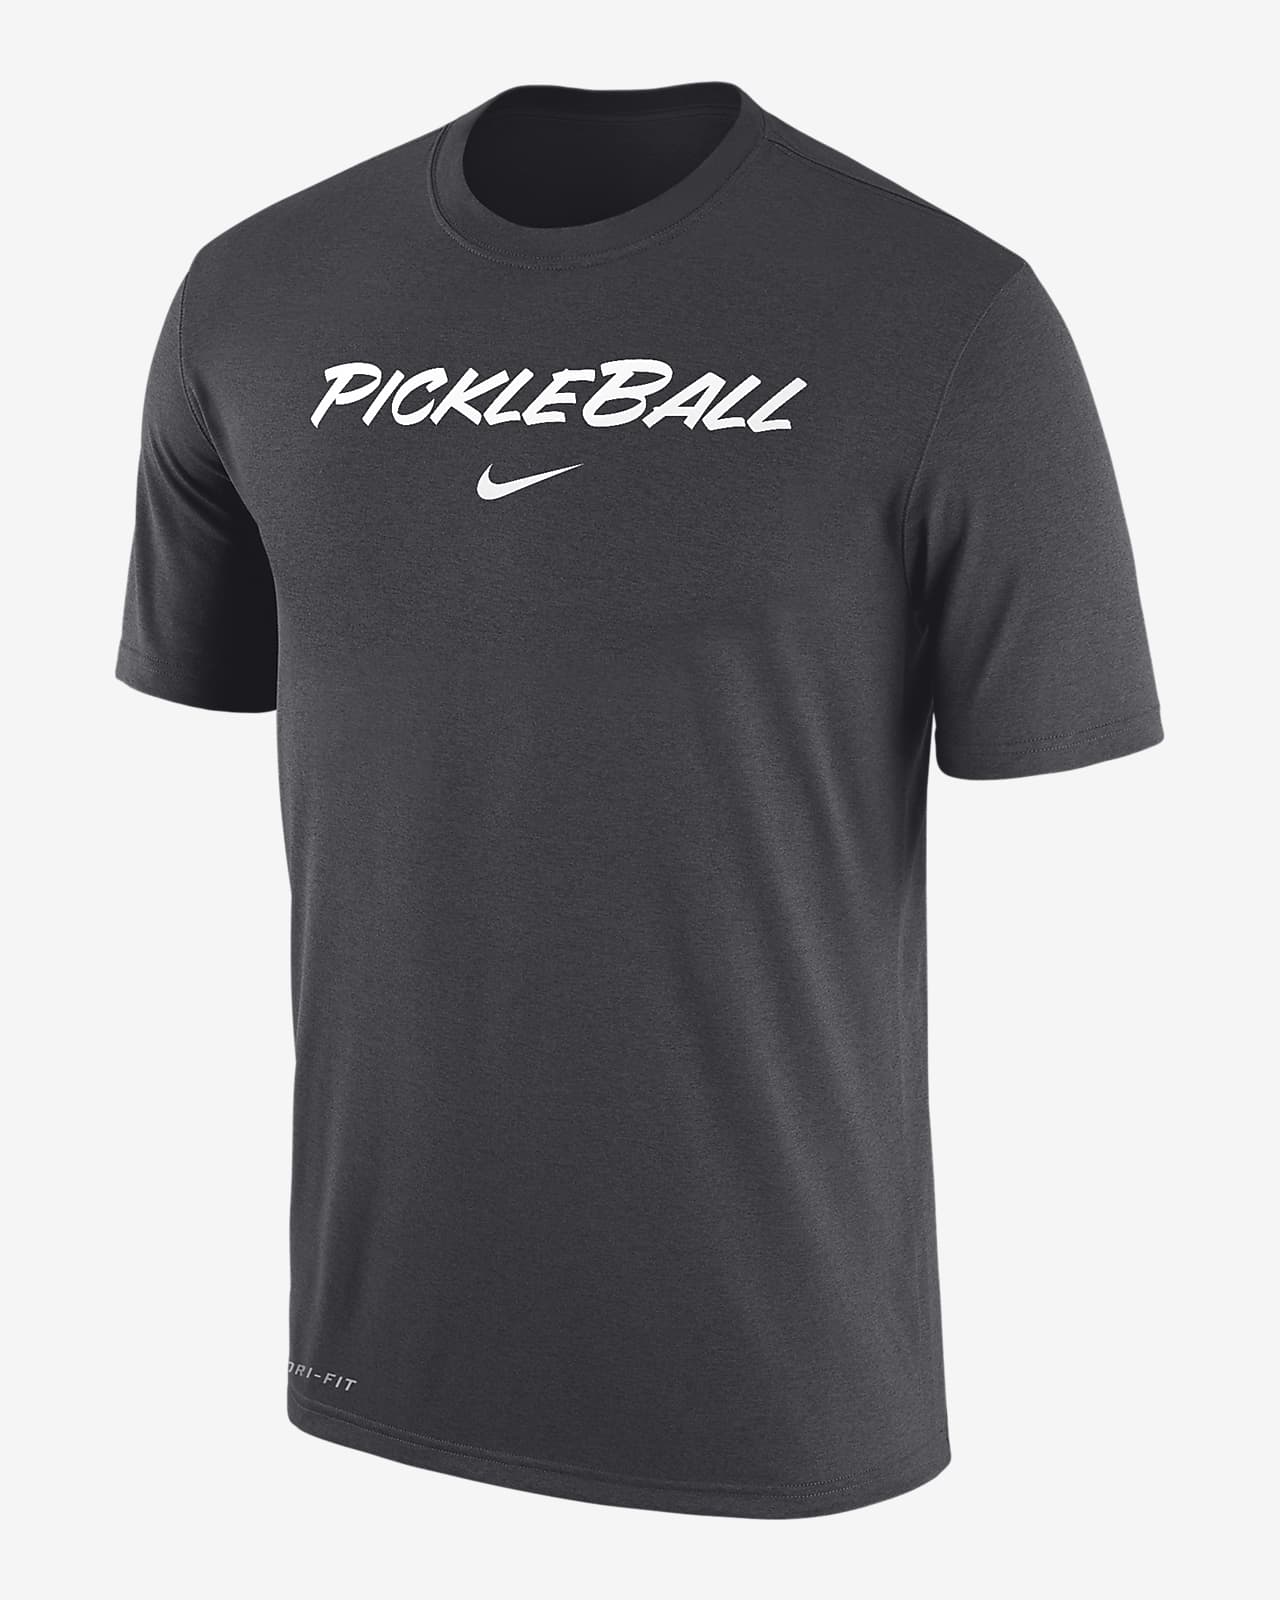 Nike Men's Dri-FIT Pickleball T-Shirt